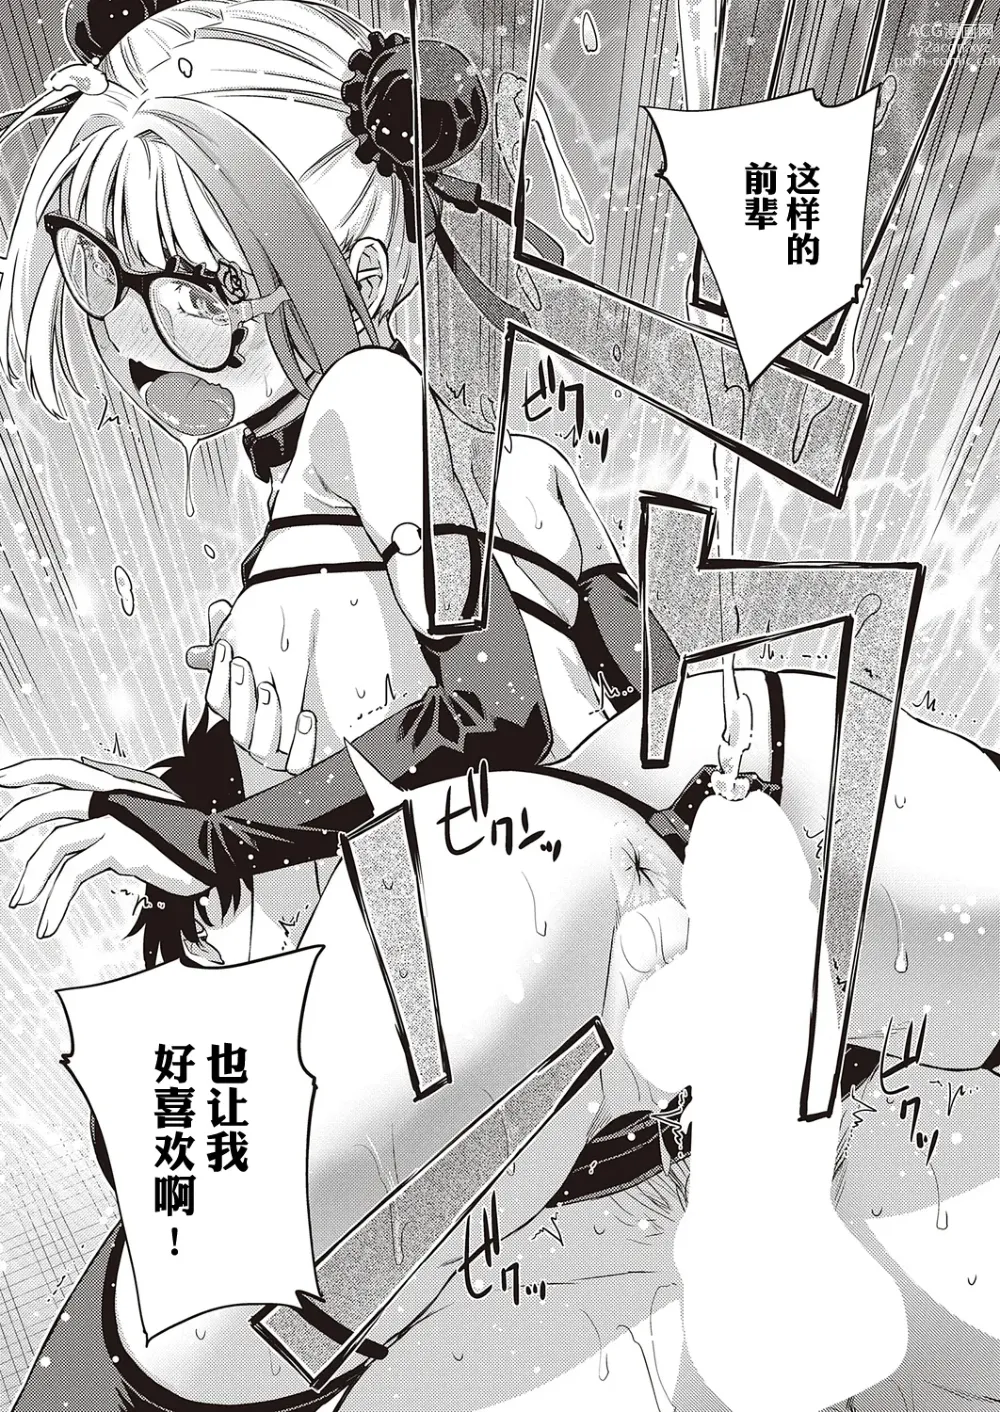 Page 23 of manga Houkago Megane Club